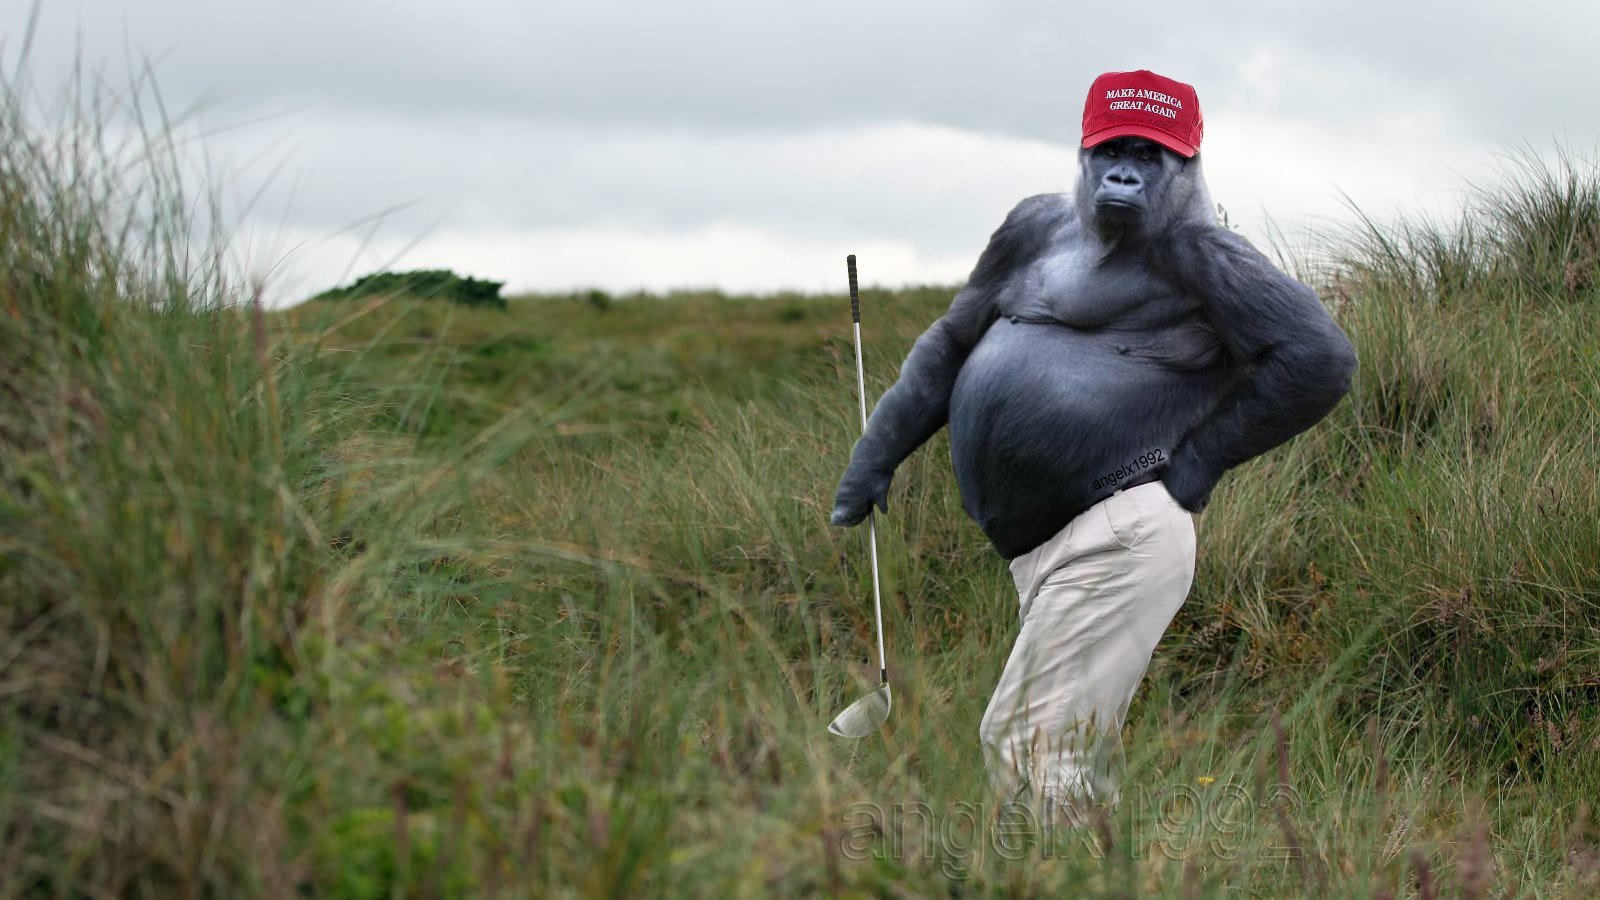 Angelx1992 On Memes Monkey Trump Magats Golf